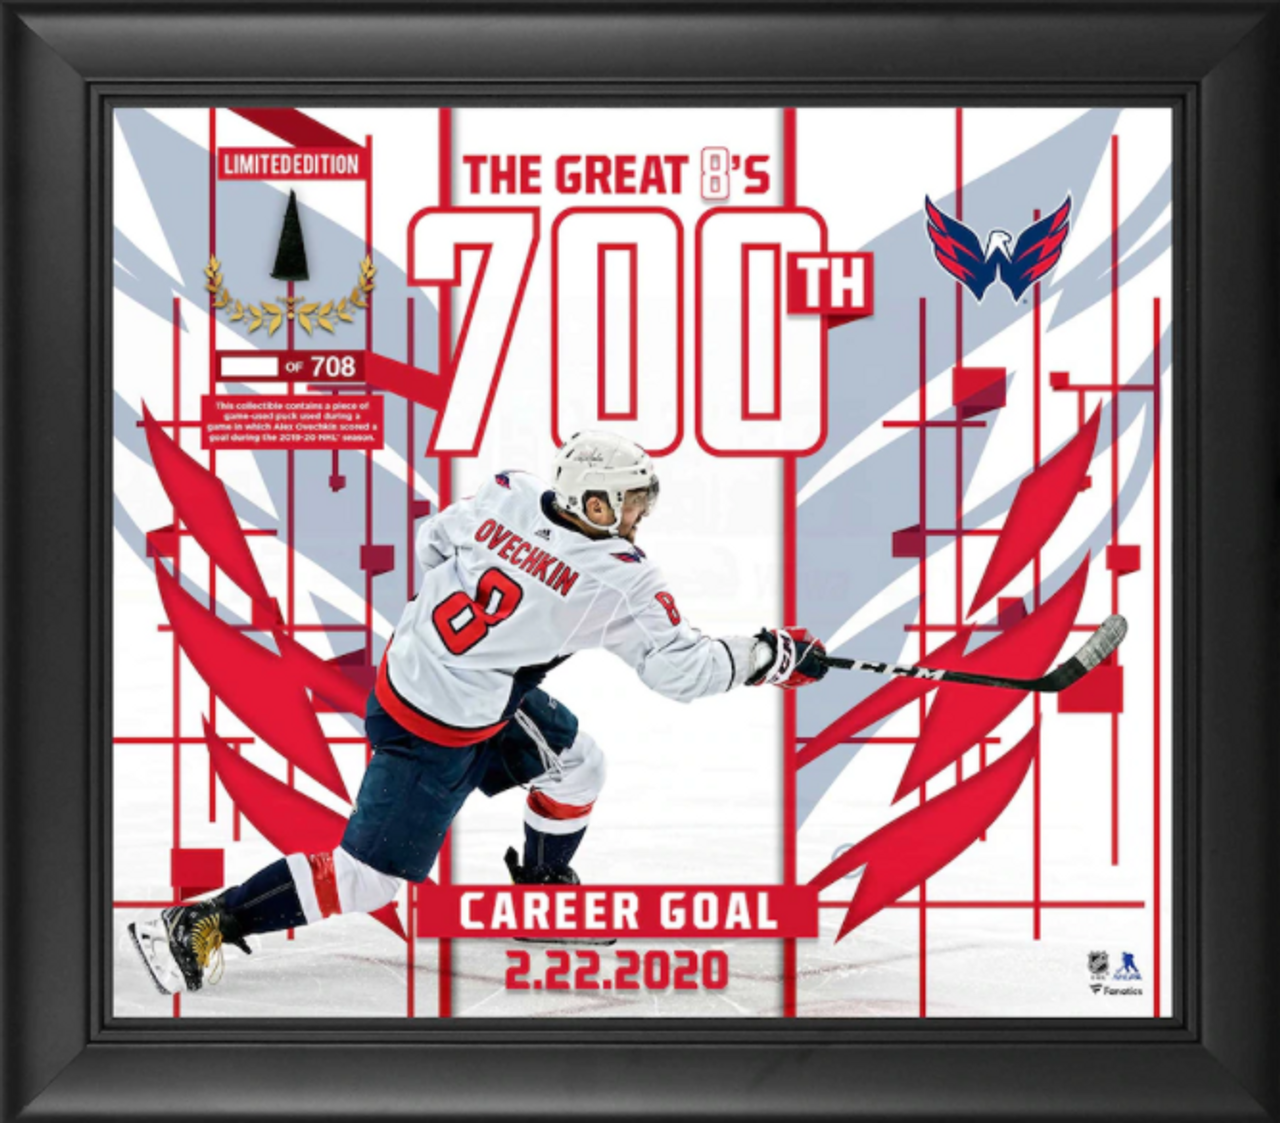 Alexander Ovechkin Finally Wins Stanley Cup Wall Art Home Decor - POSTER  20x30